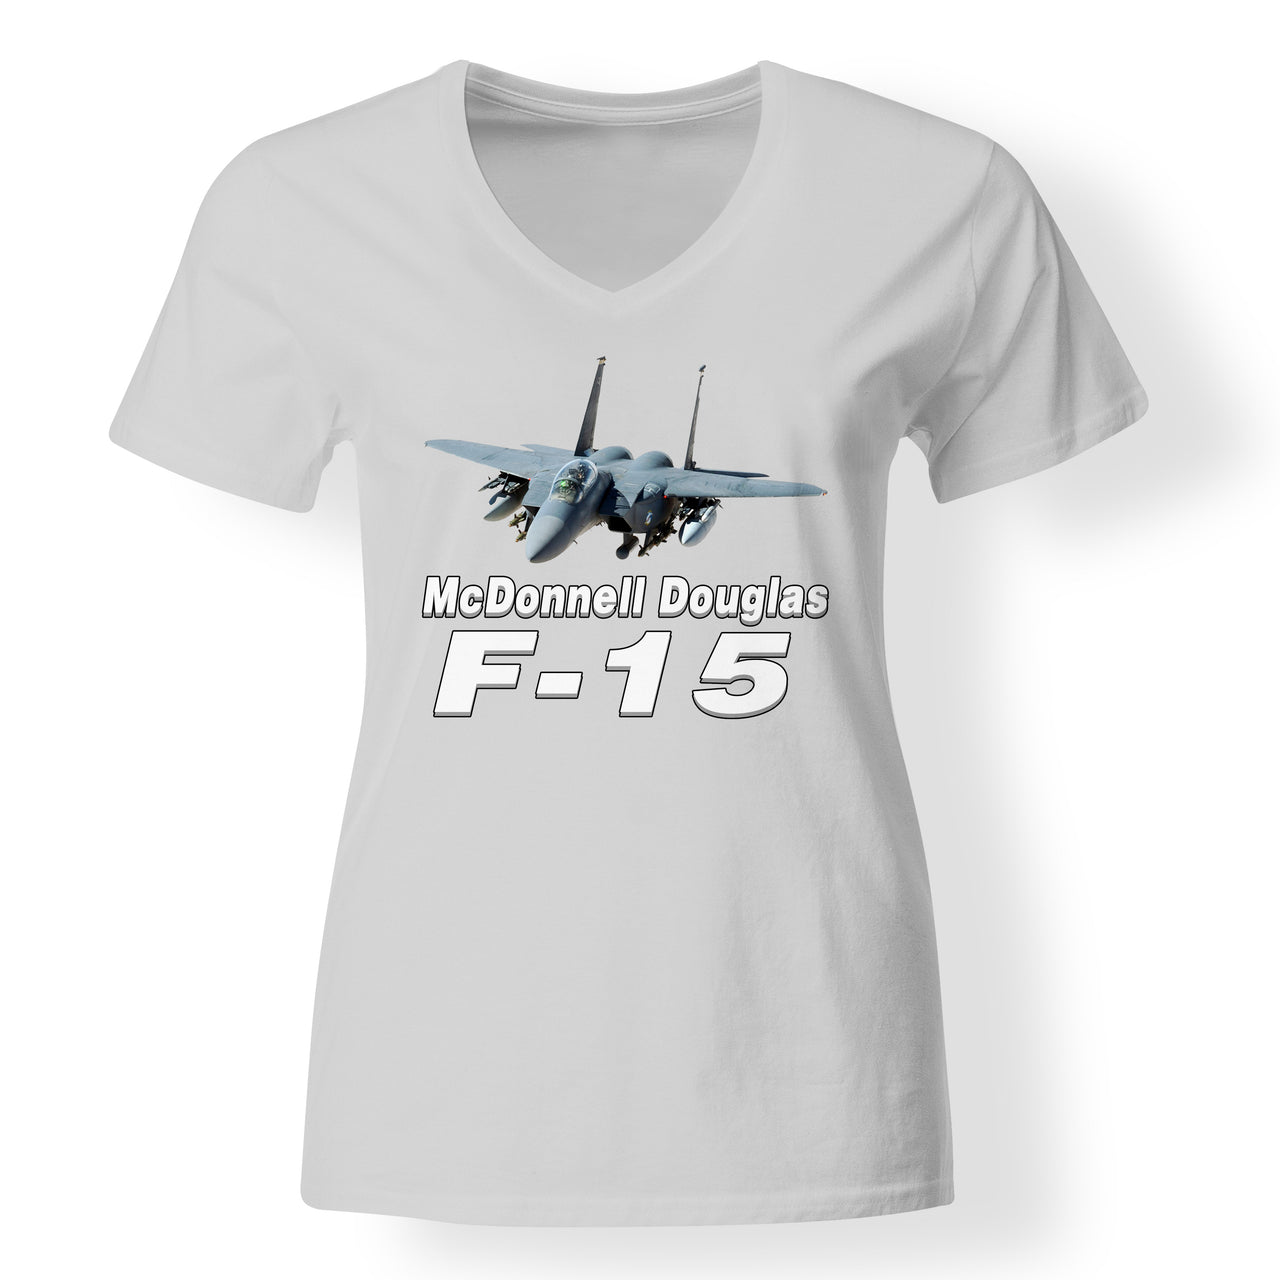 The McDonnell Douglas F15 Designed V-Neck T-Shirts